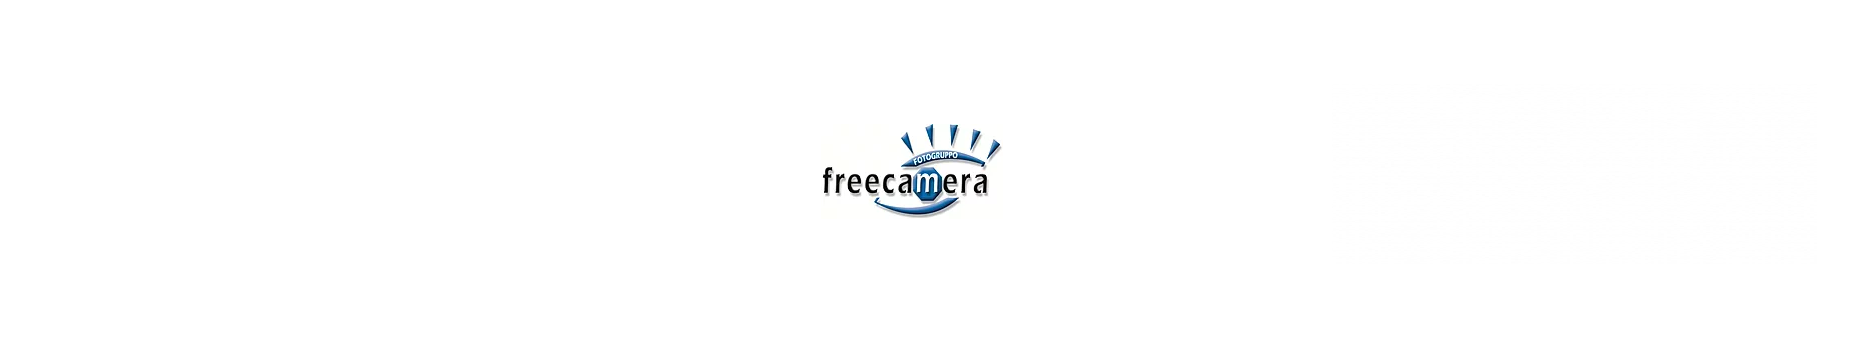 Associazione Freecamera - logo